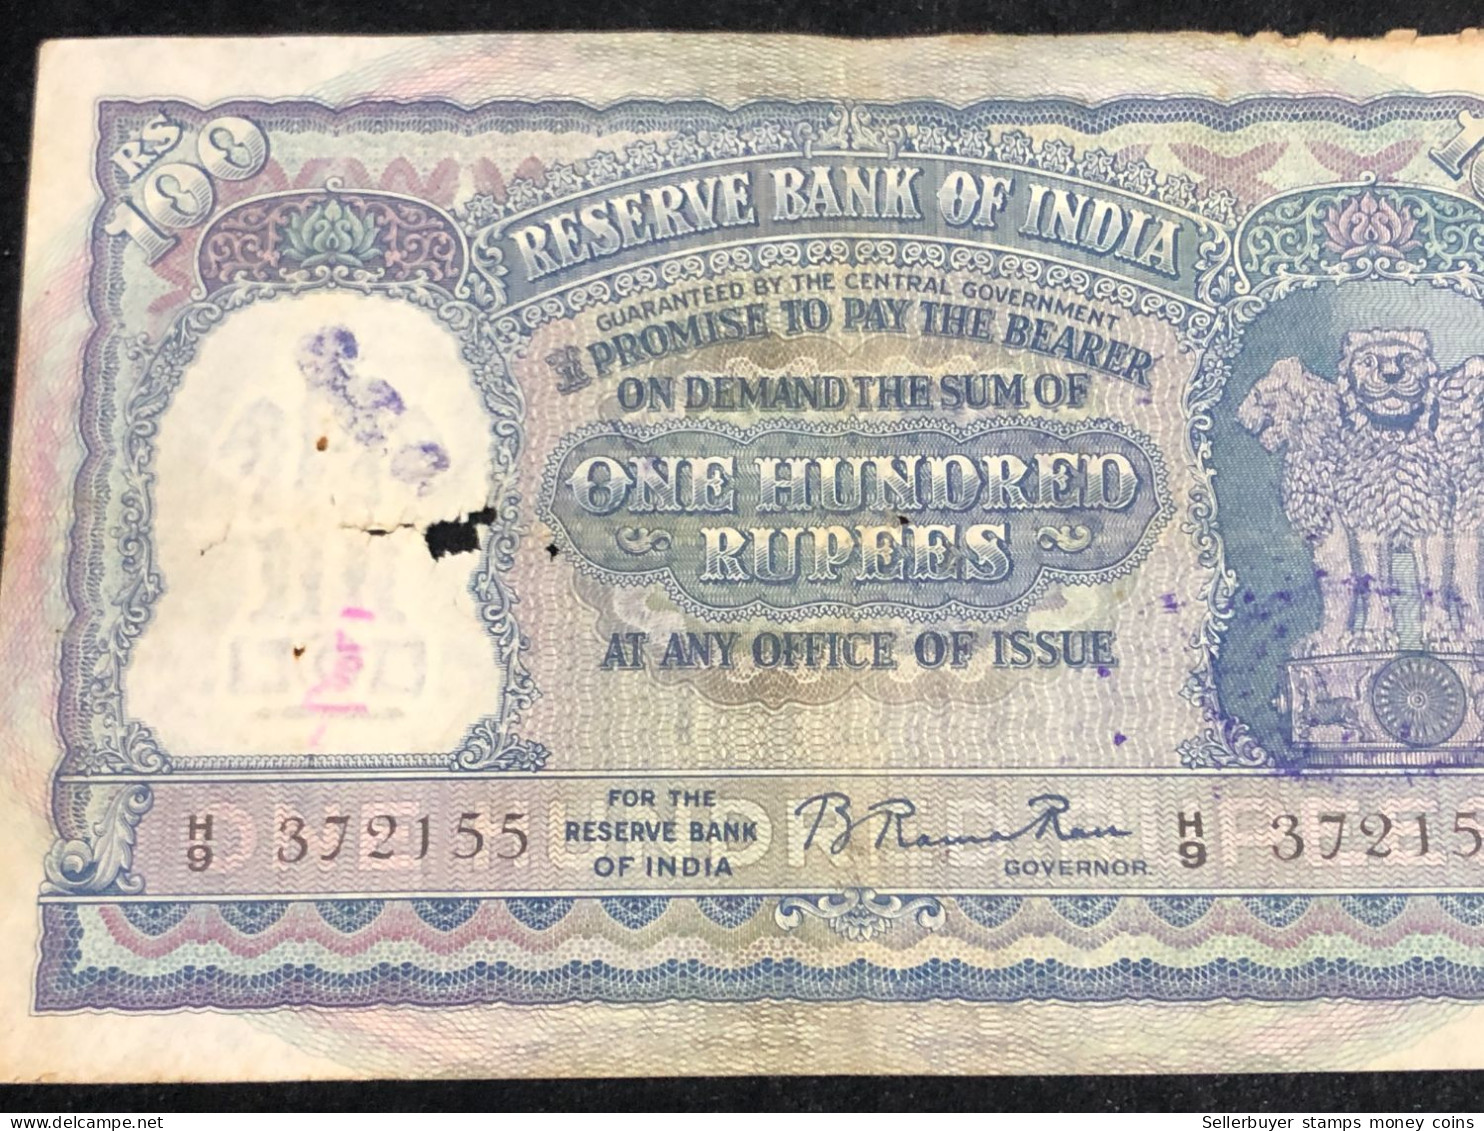 INDIA 100 RUPEES P-43  1957 TIGER ELEPHANT DAM MONEY BILL Rhas Pinhole ARE BANK NOTE Black Number Below 1 Pcs Au Very Ra - Inde